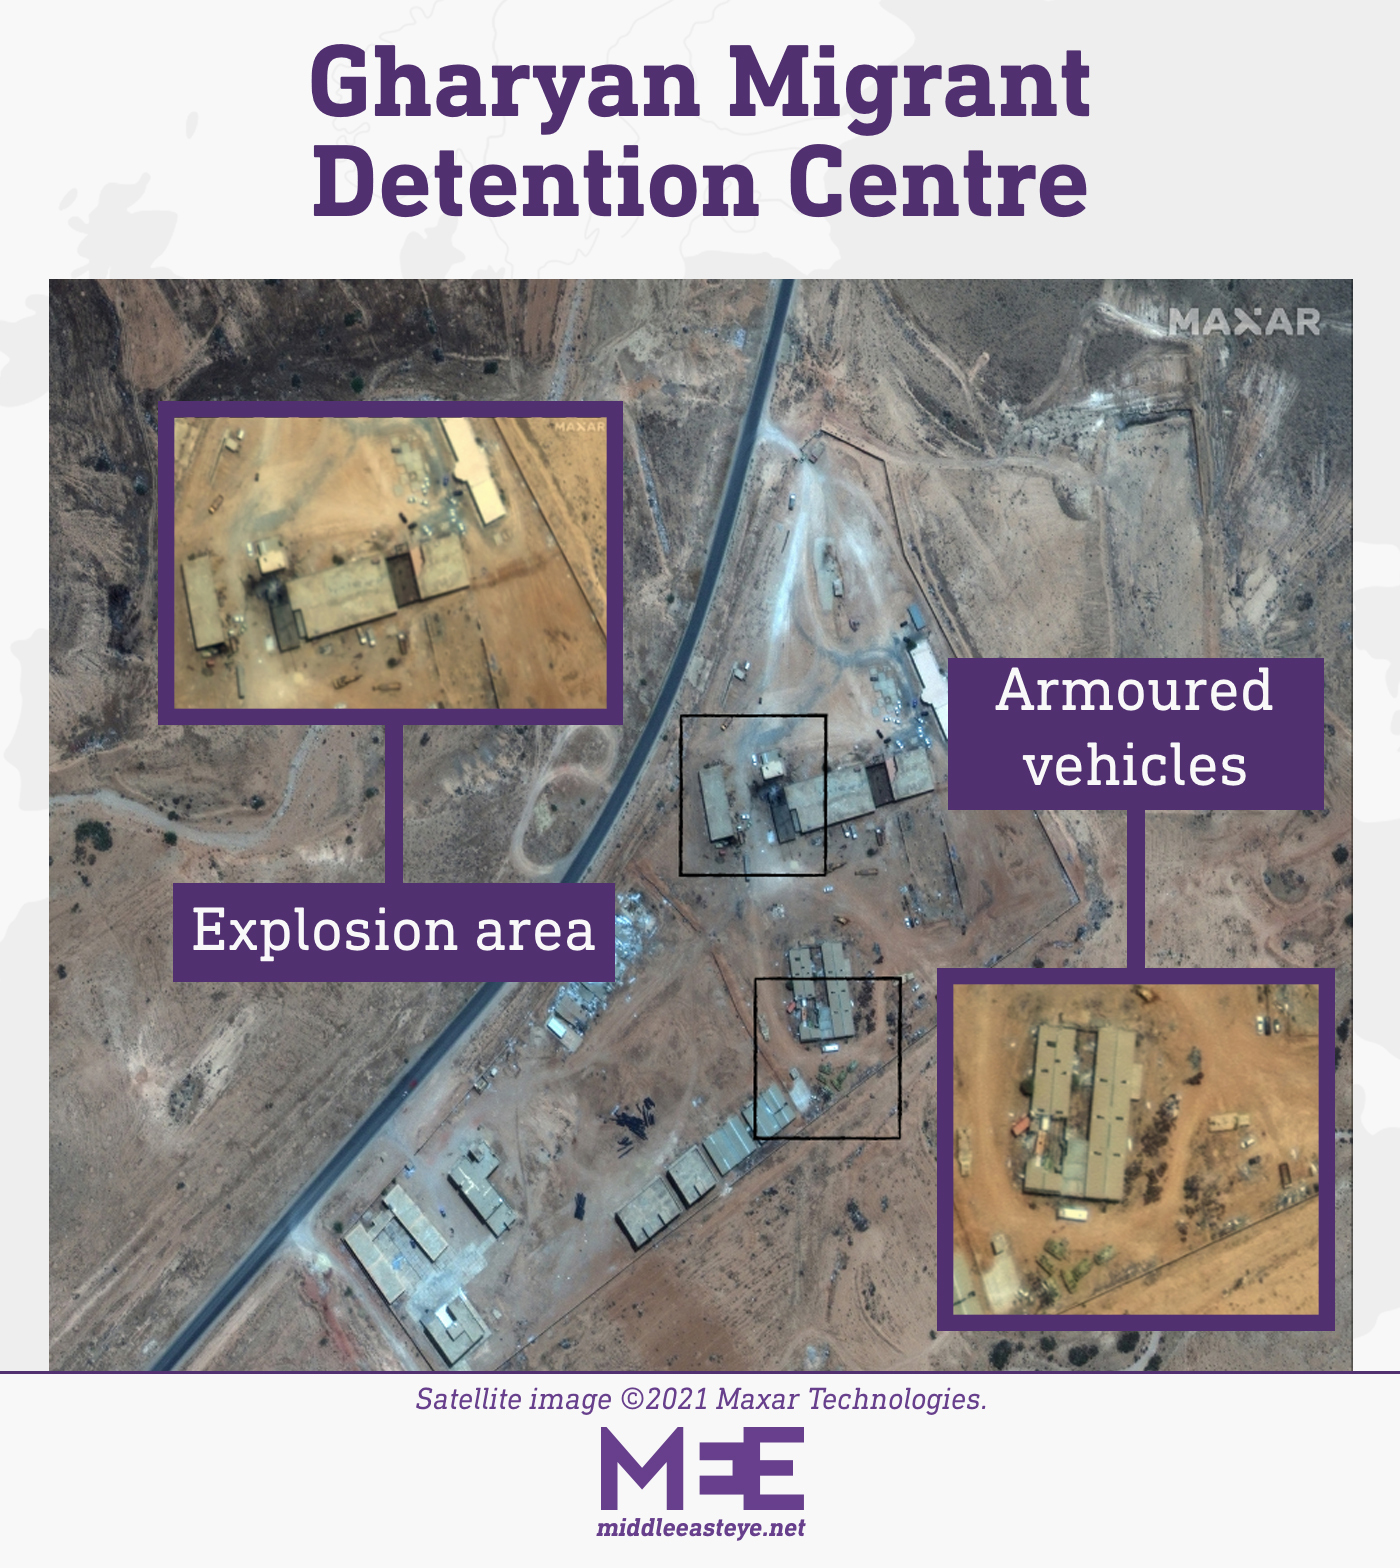 Gharyan Migrant Detention Centre